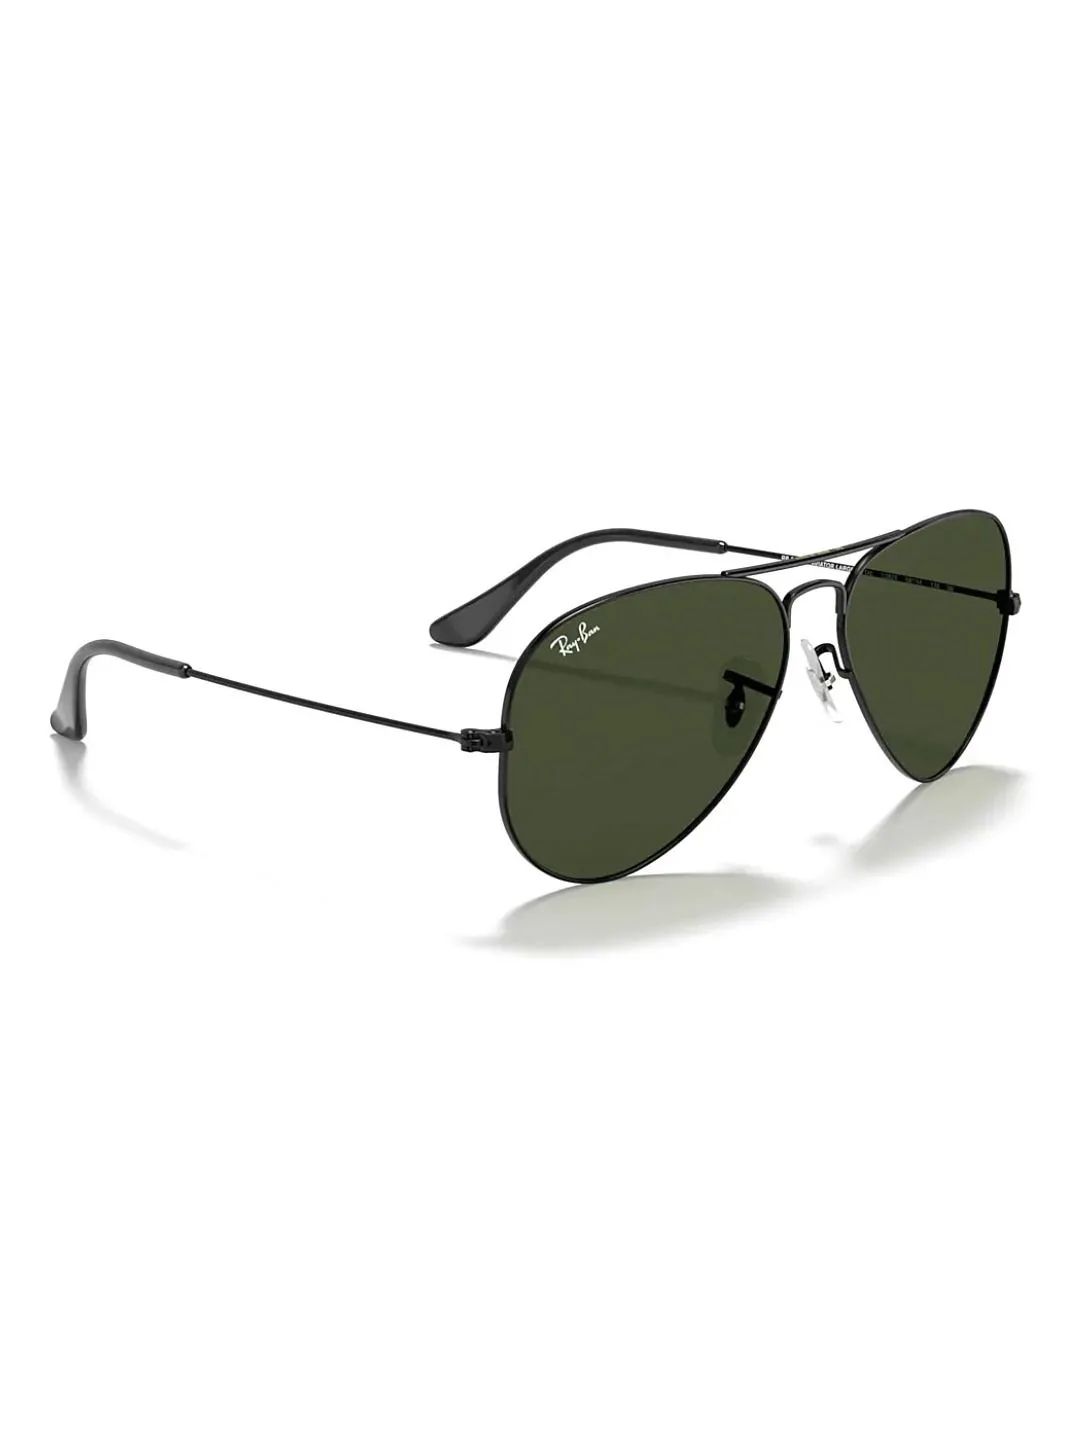 Ray-Ban Aviator classic sunglasses RB3025 L2823 58-14